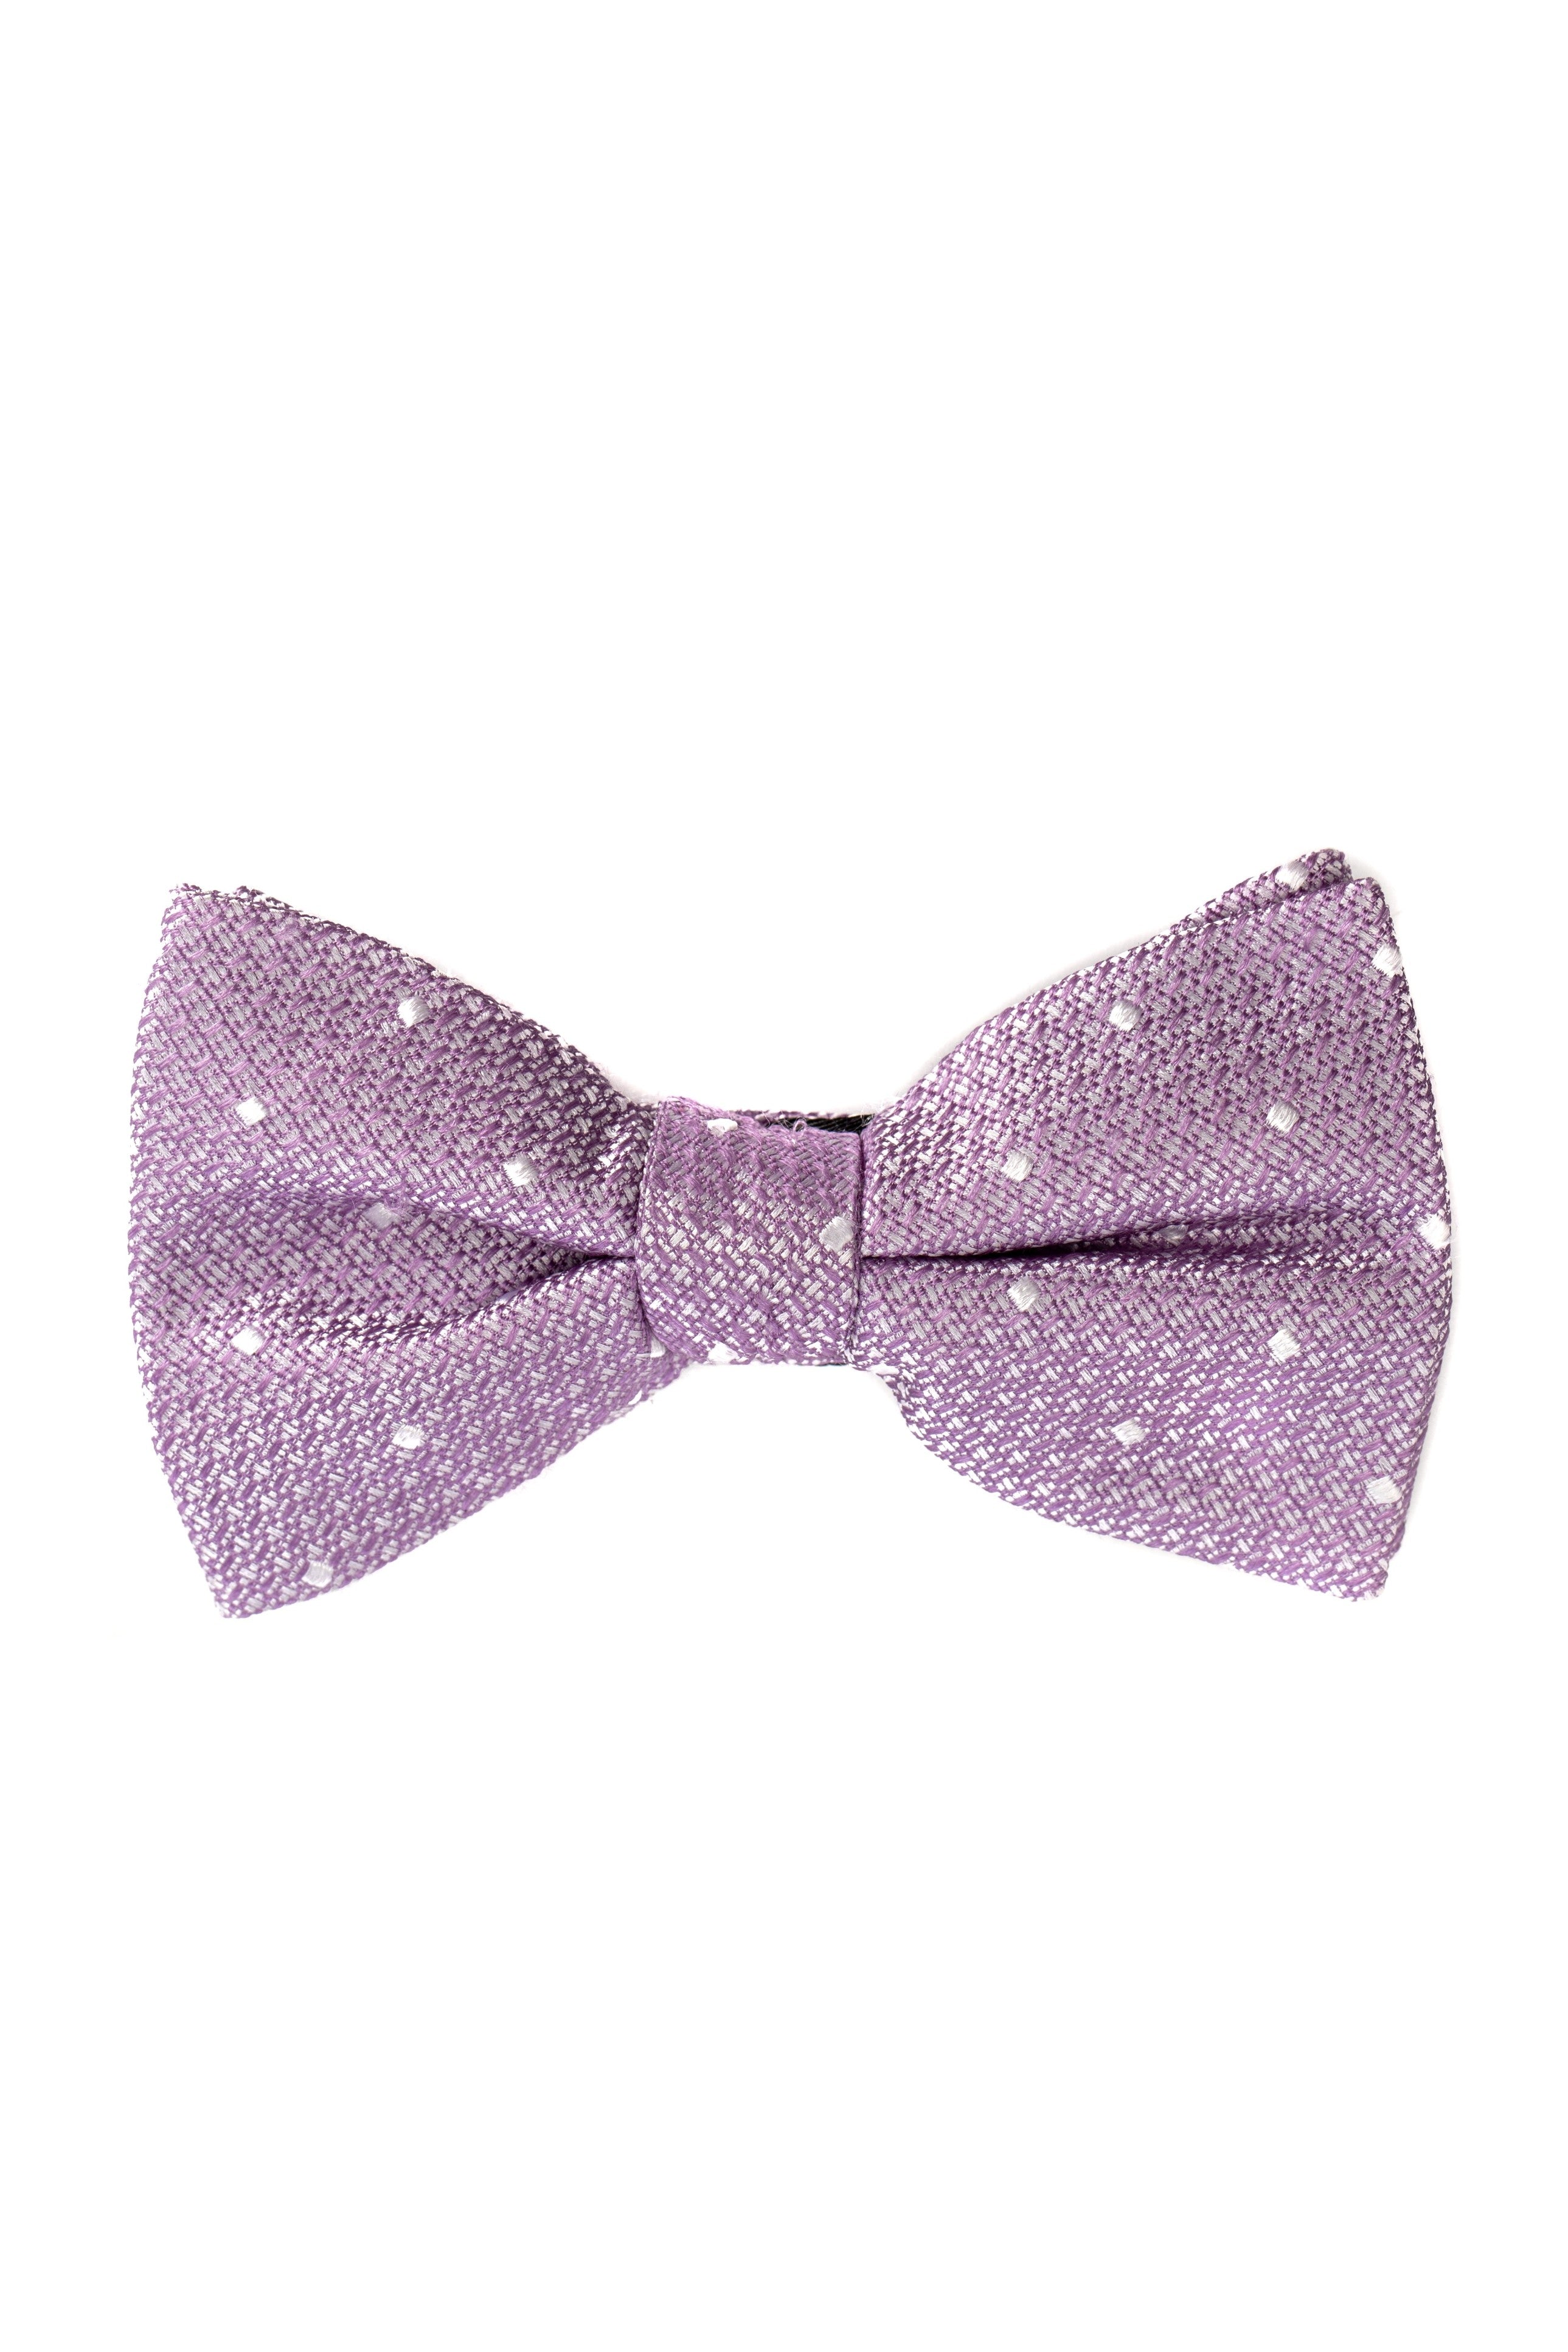 Lilac Bow Tie With White Diamonds